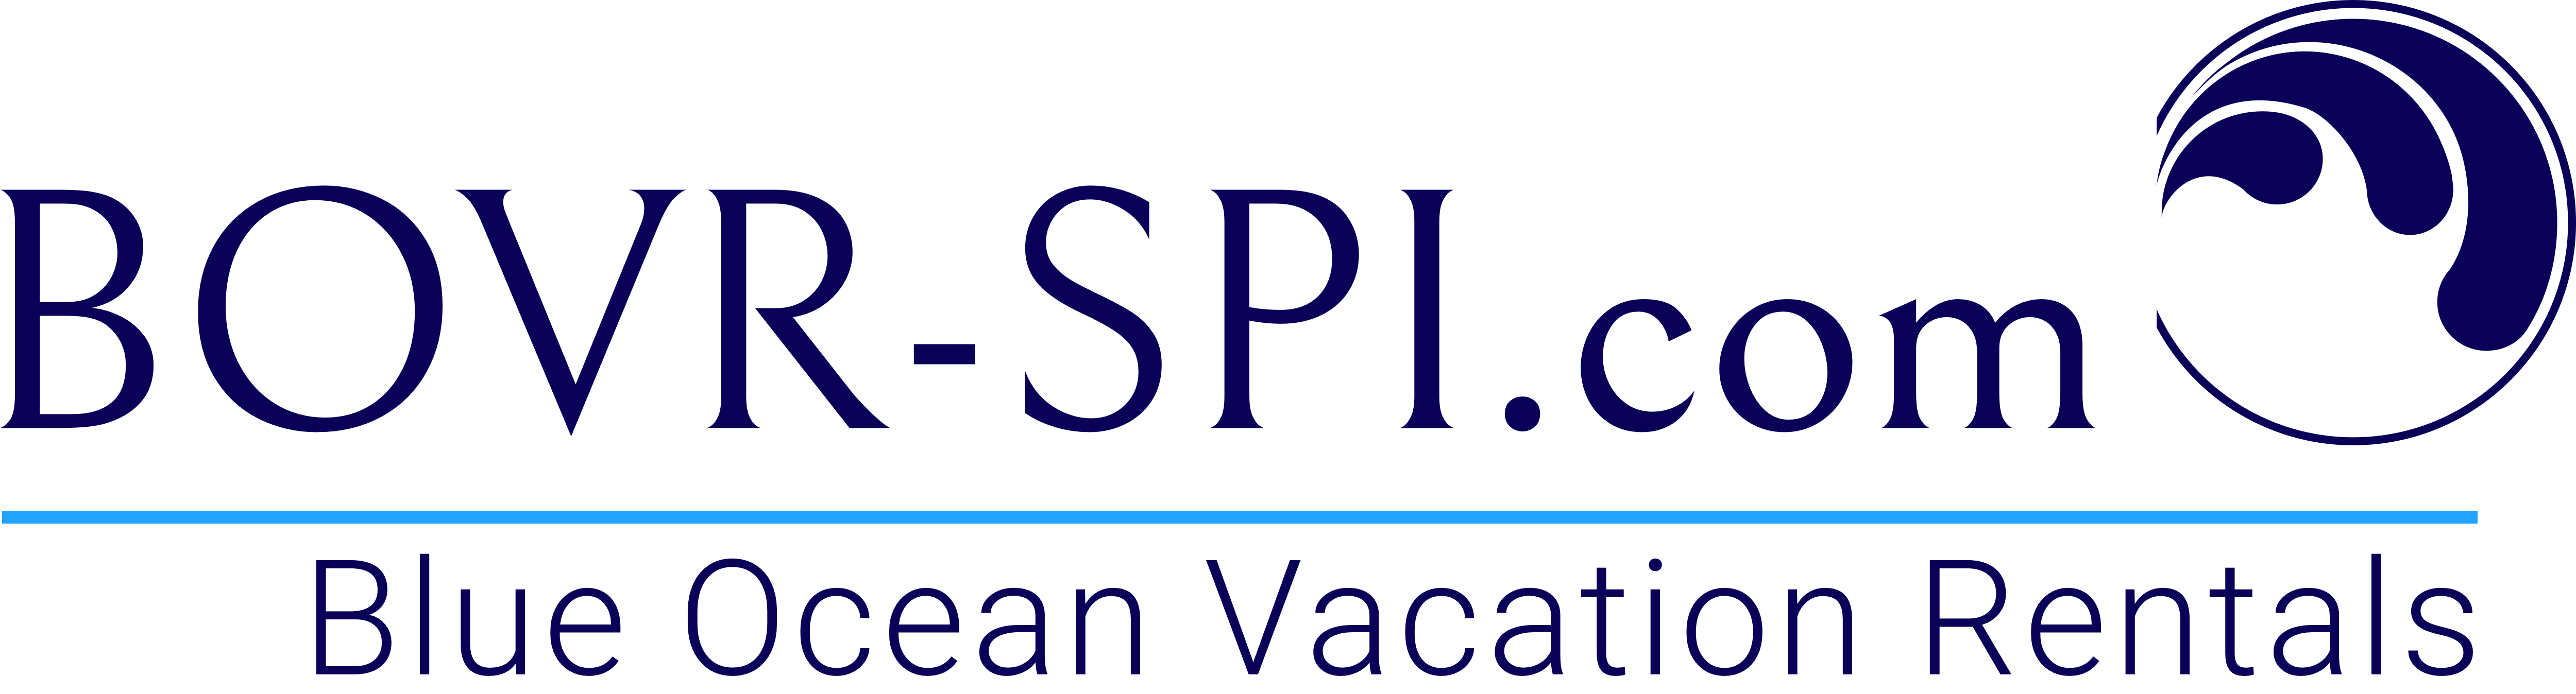 Blue Ocean Vacation Rentals brand logo